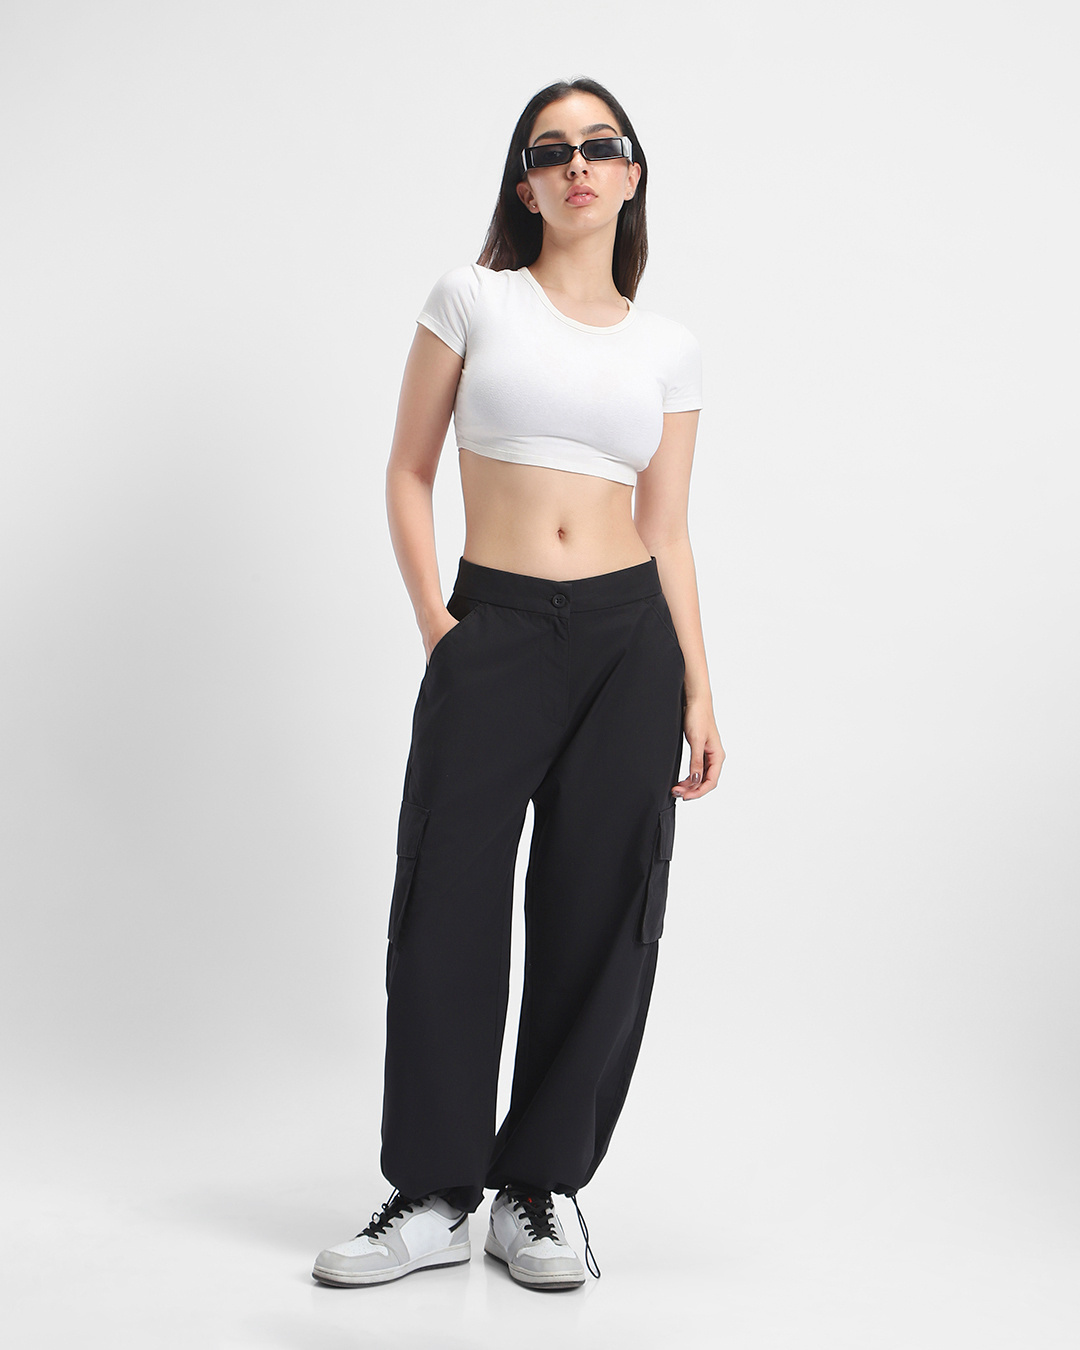 Buy Olive Trousers  Pants for Women by Popnetic Online  Ajiocom